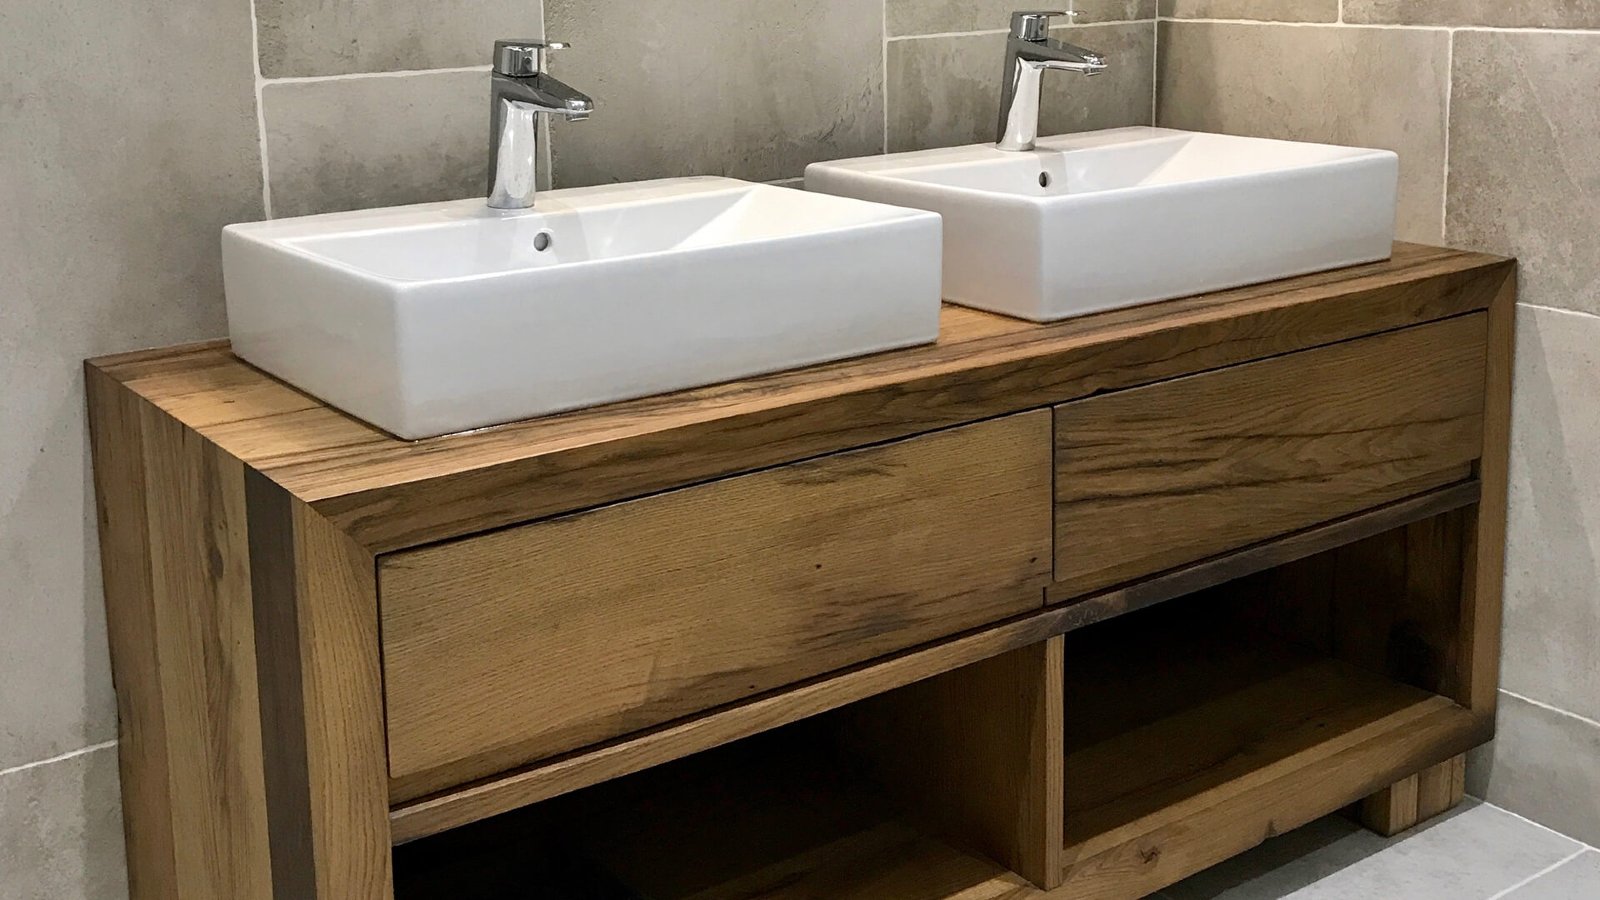 Bramhope Bathroom Sink Cabinet - Born of Wood